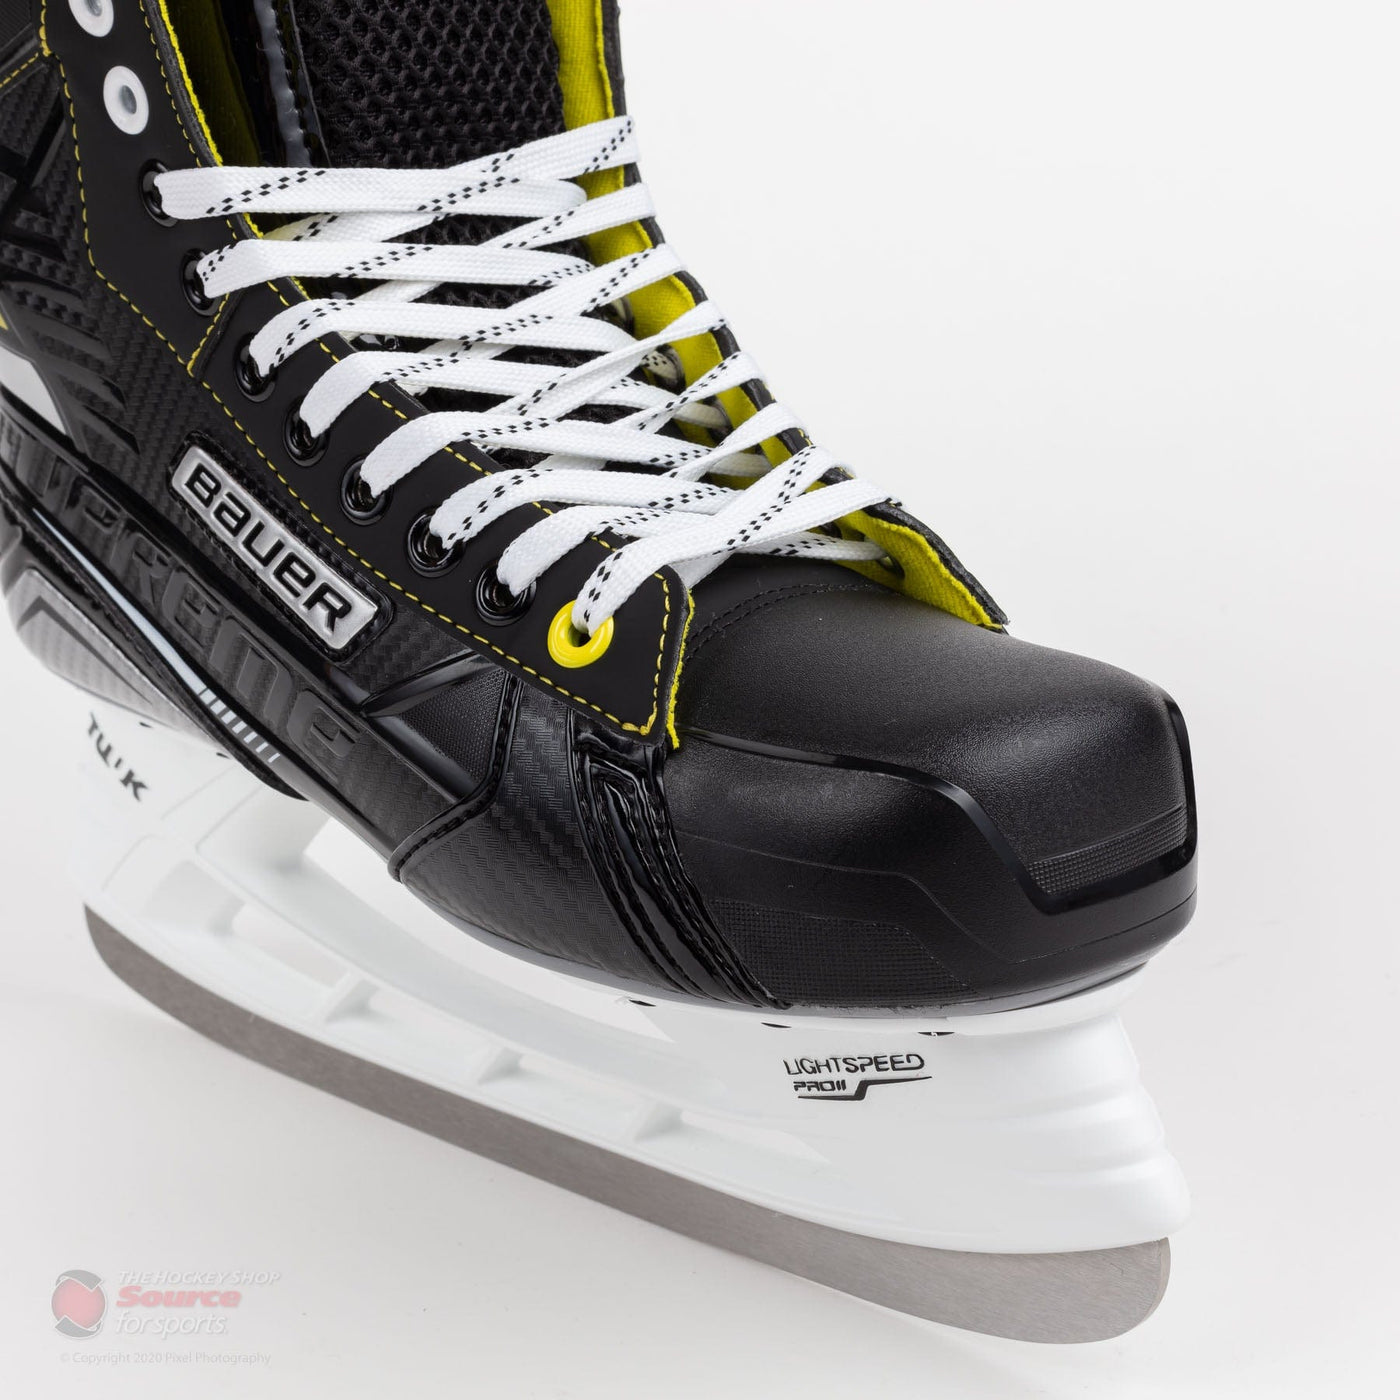 Bauer Supreme S35 Senior Hockey Skates